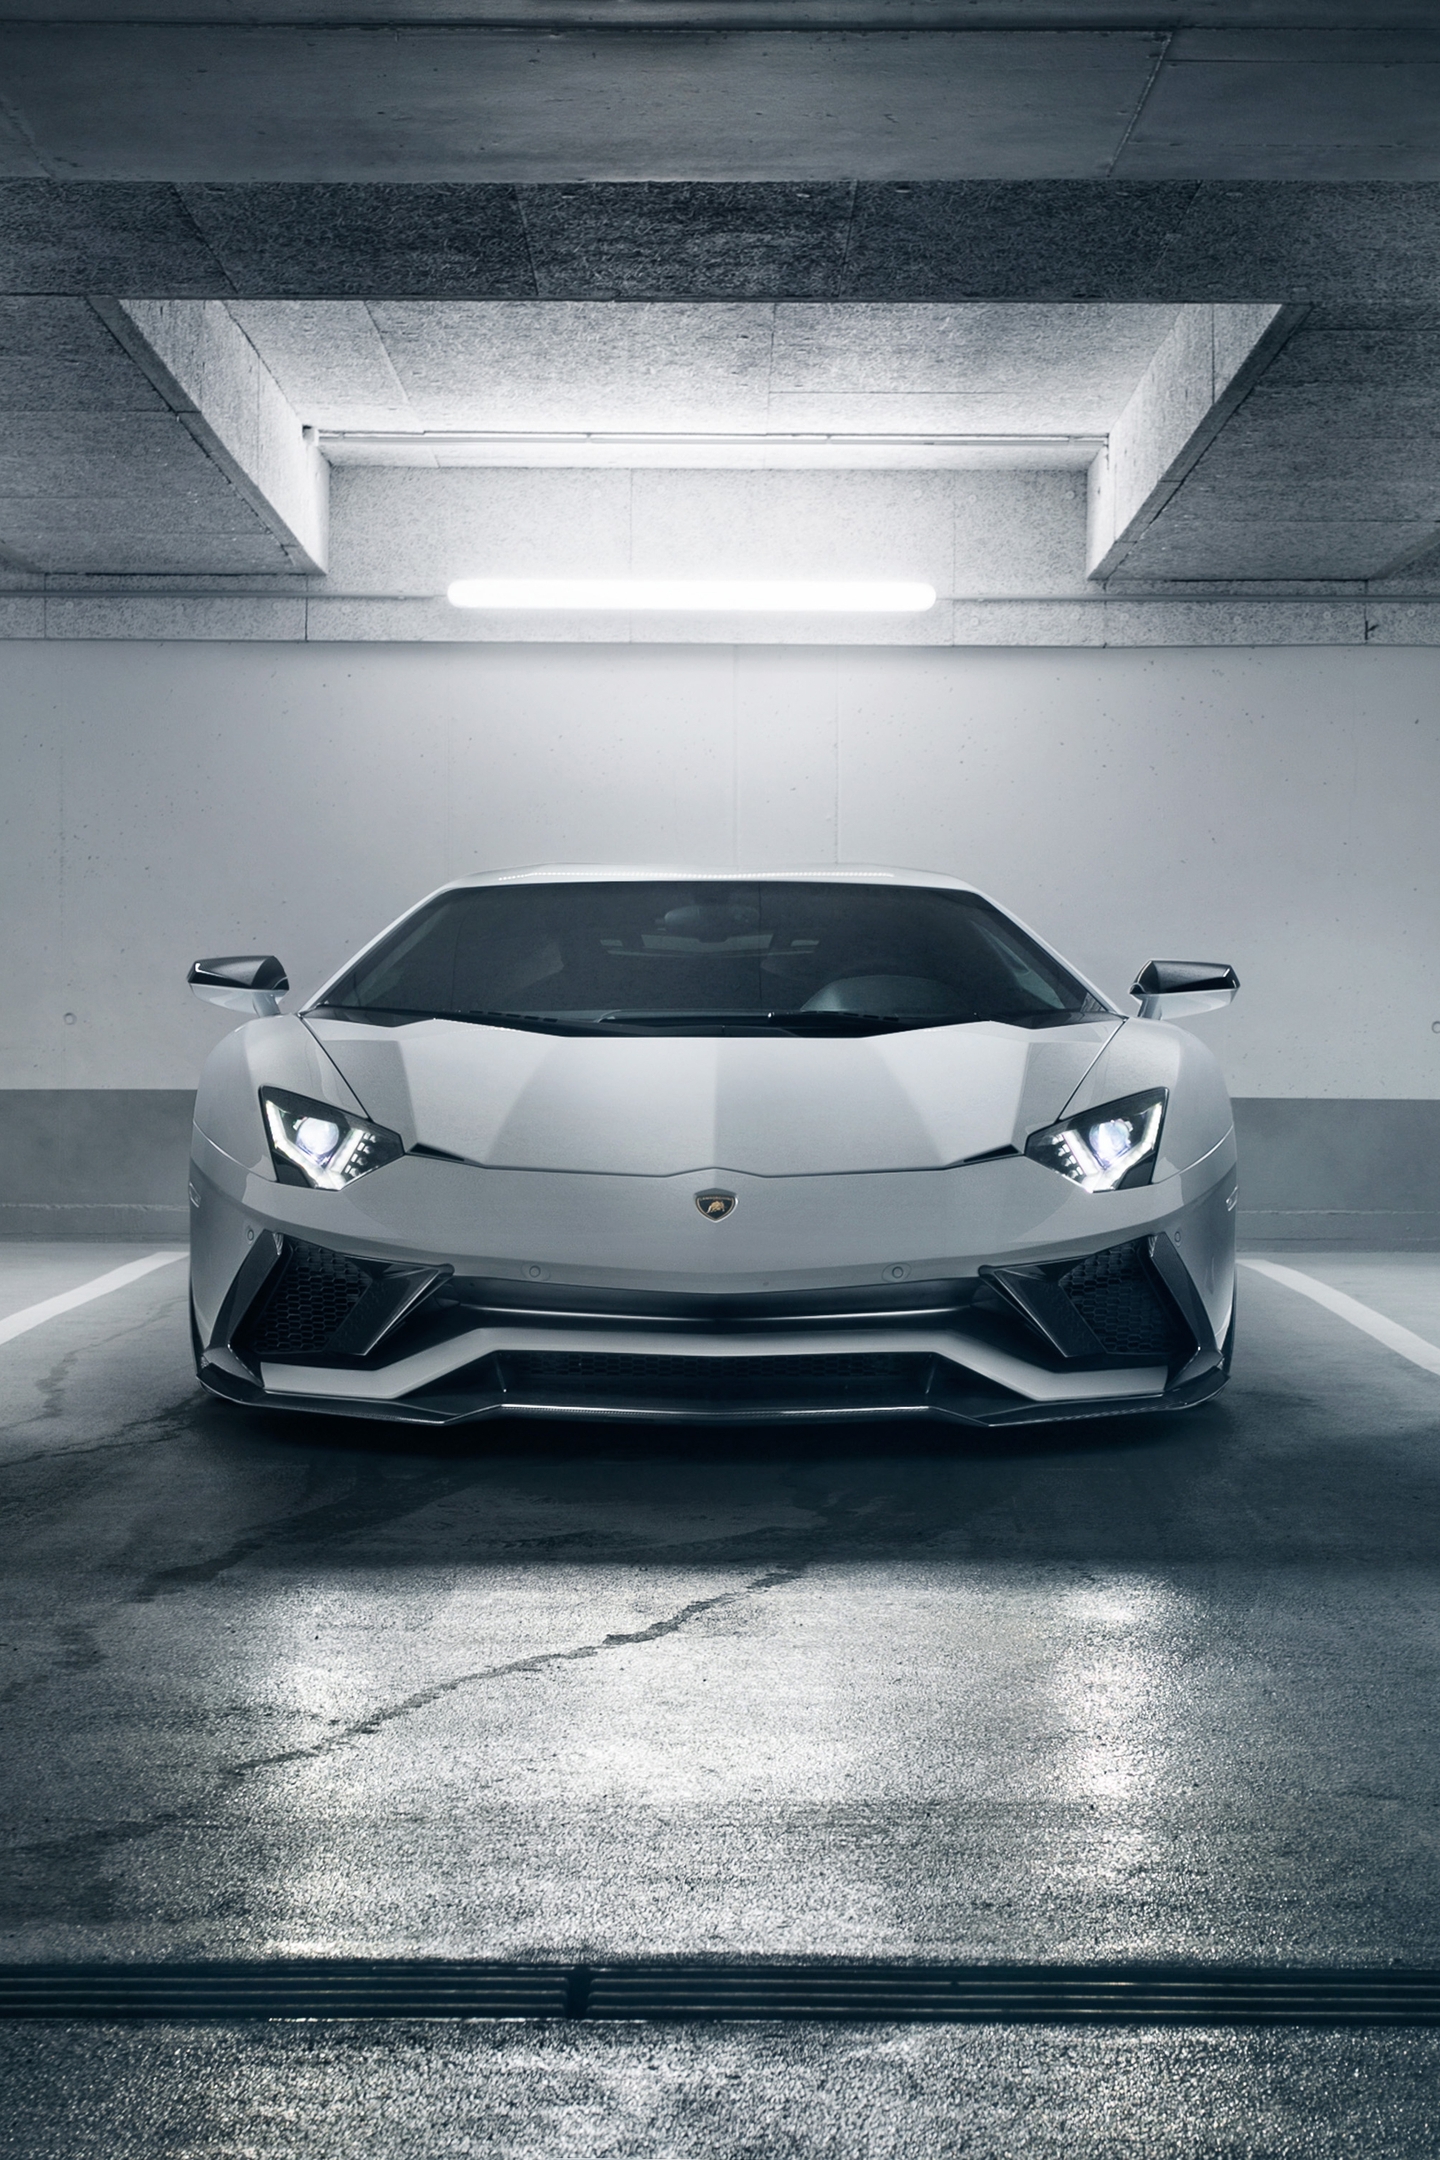 Image: Supercar, Lamborghini Aventador S, parking, white, lighting